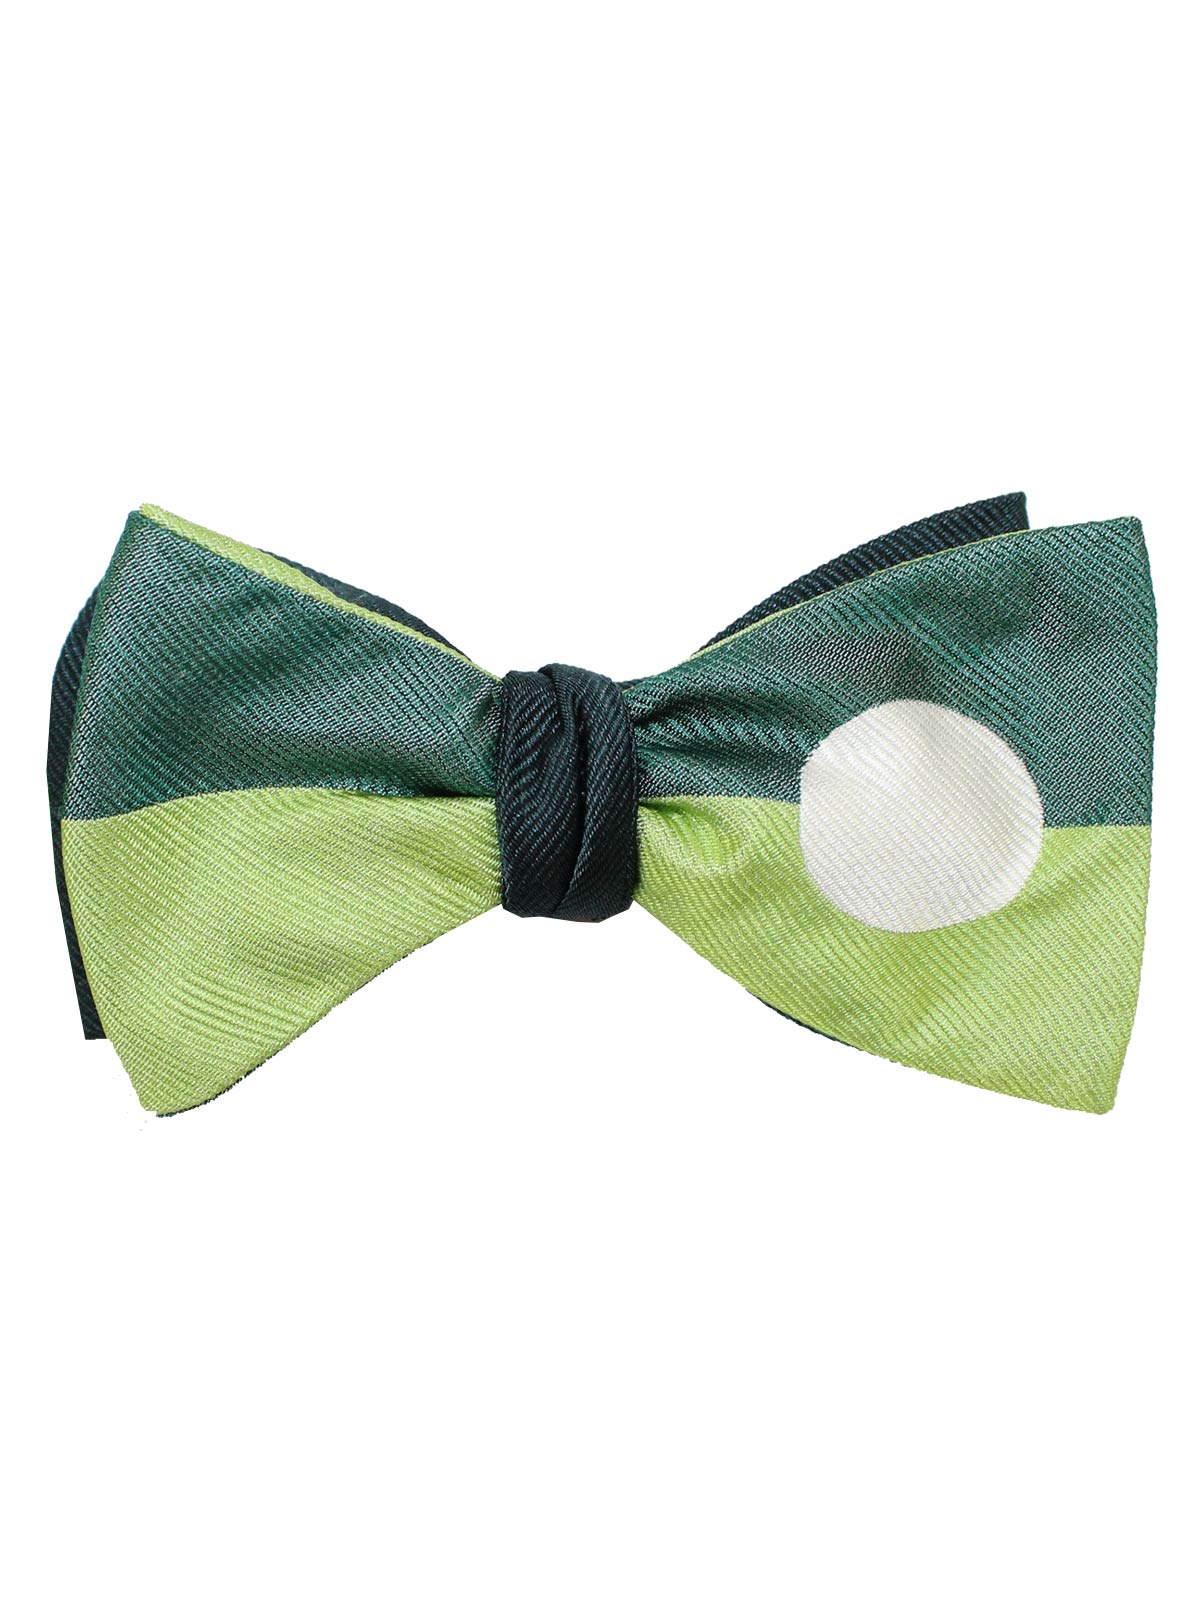 Gene Meyer Silk Bow Tie Green Stripes & Dot - Self Tie